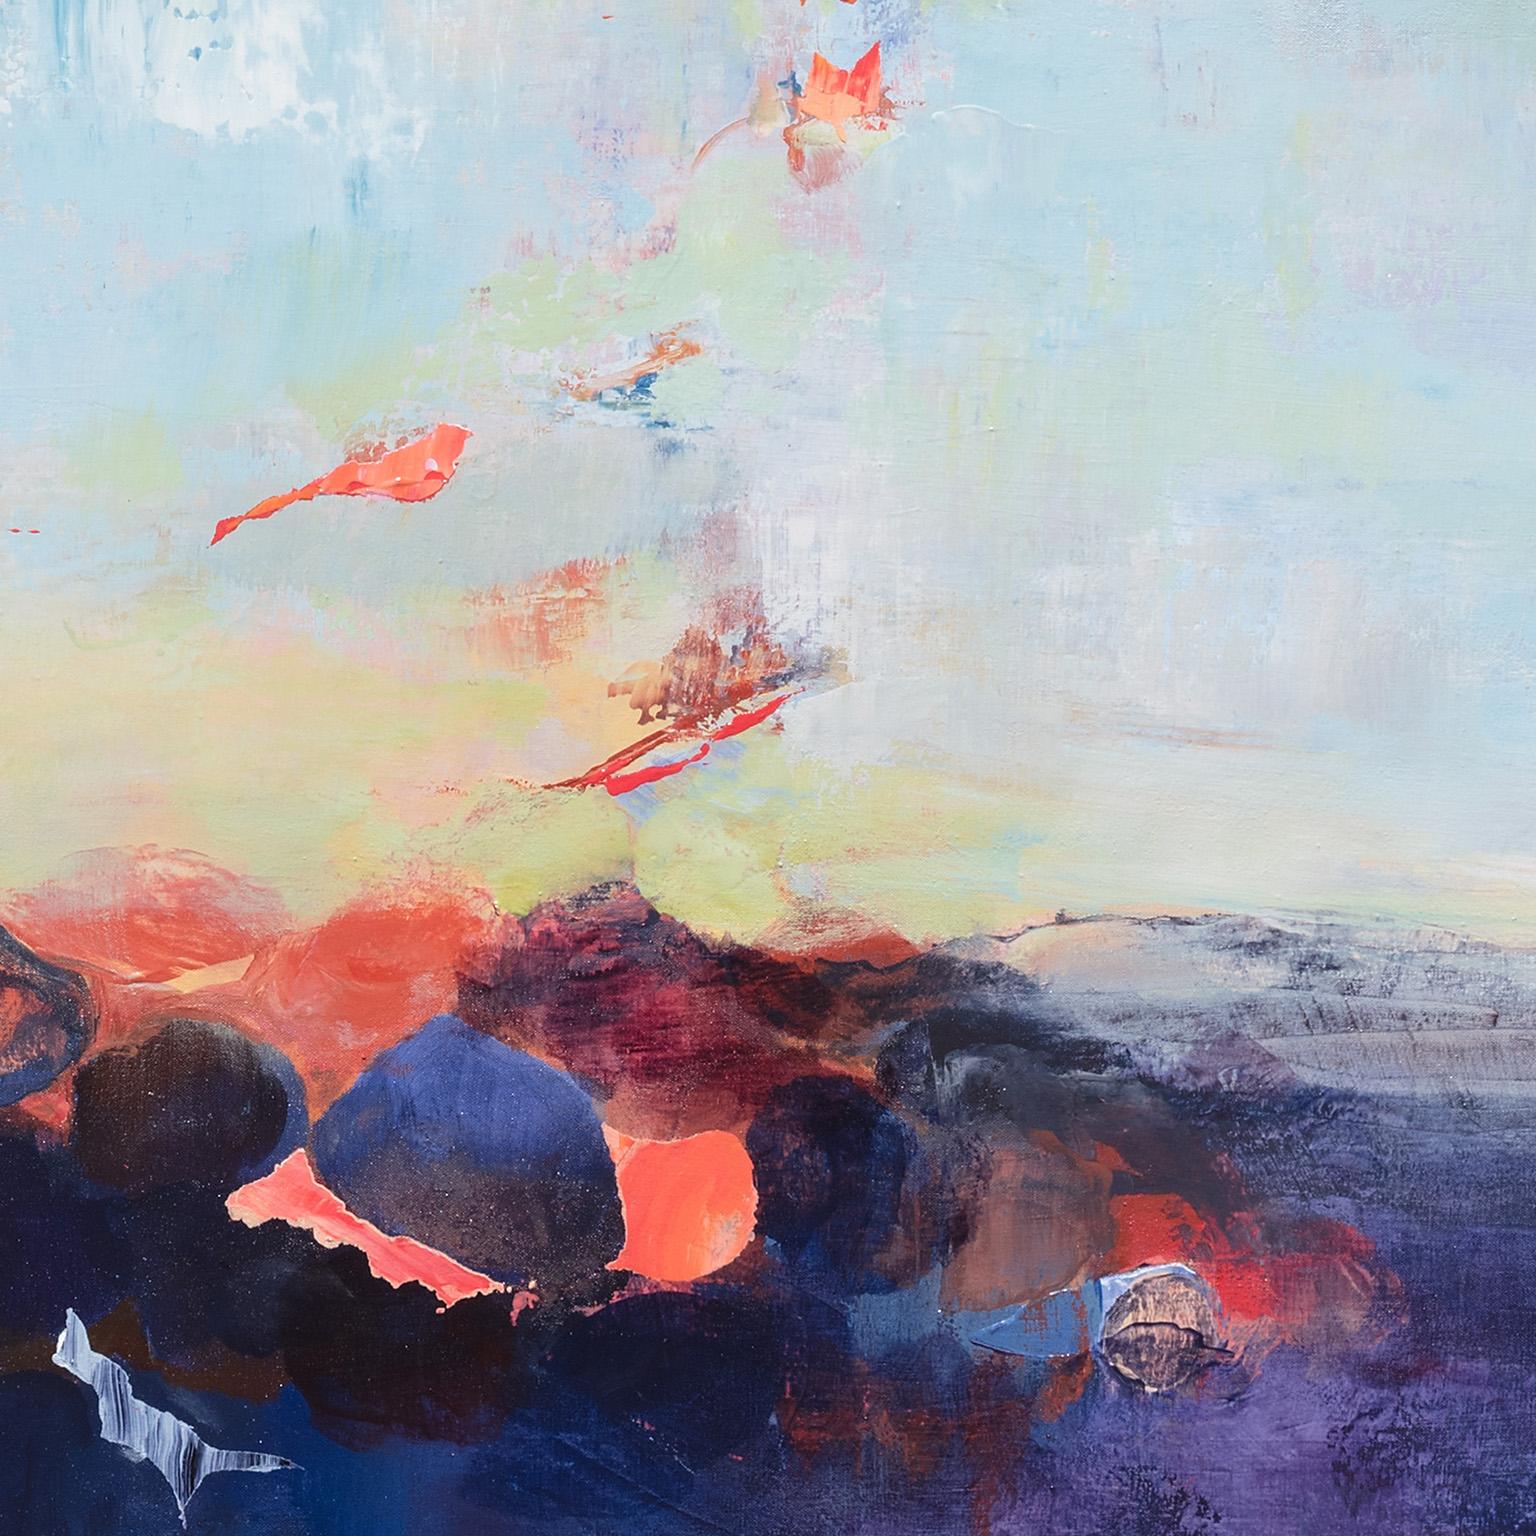 Heart of the Sunrise - Großes abstraktes Landschaftsgemälde in Blau – Painting von Andrei Petrov